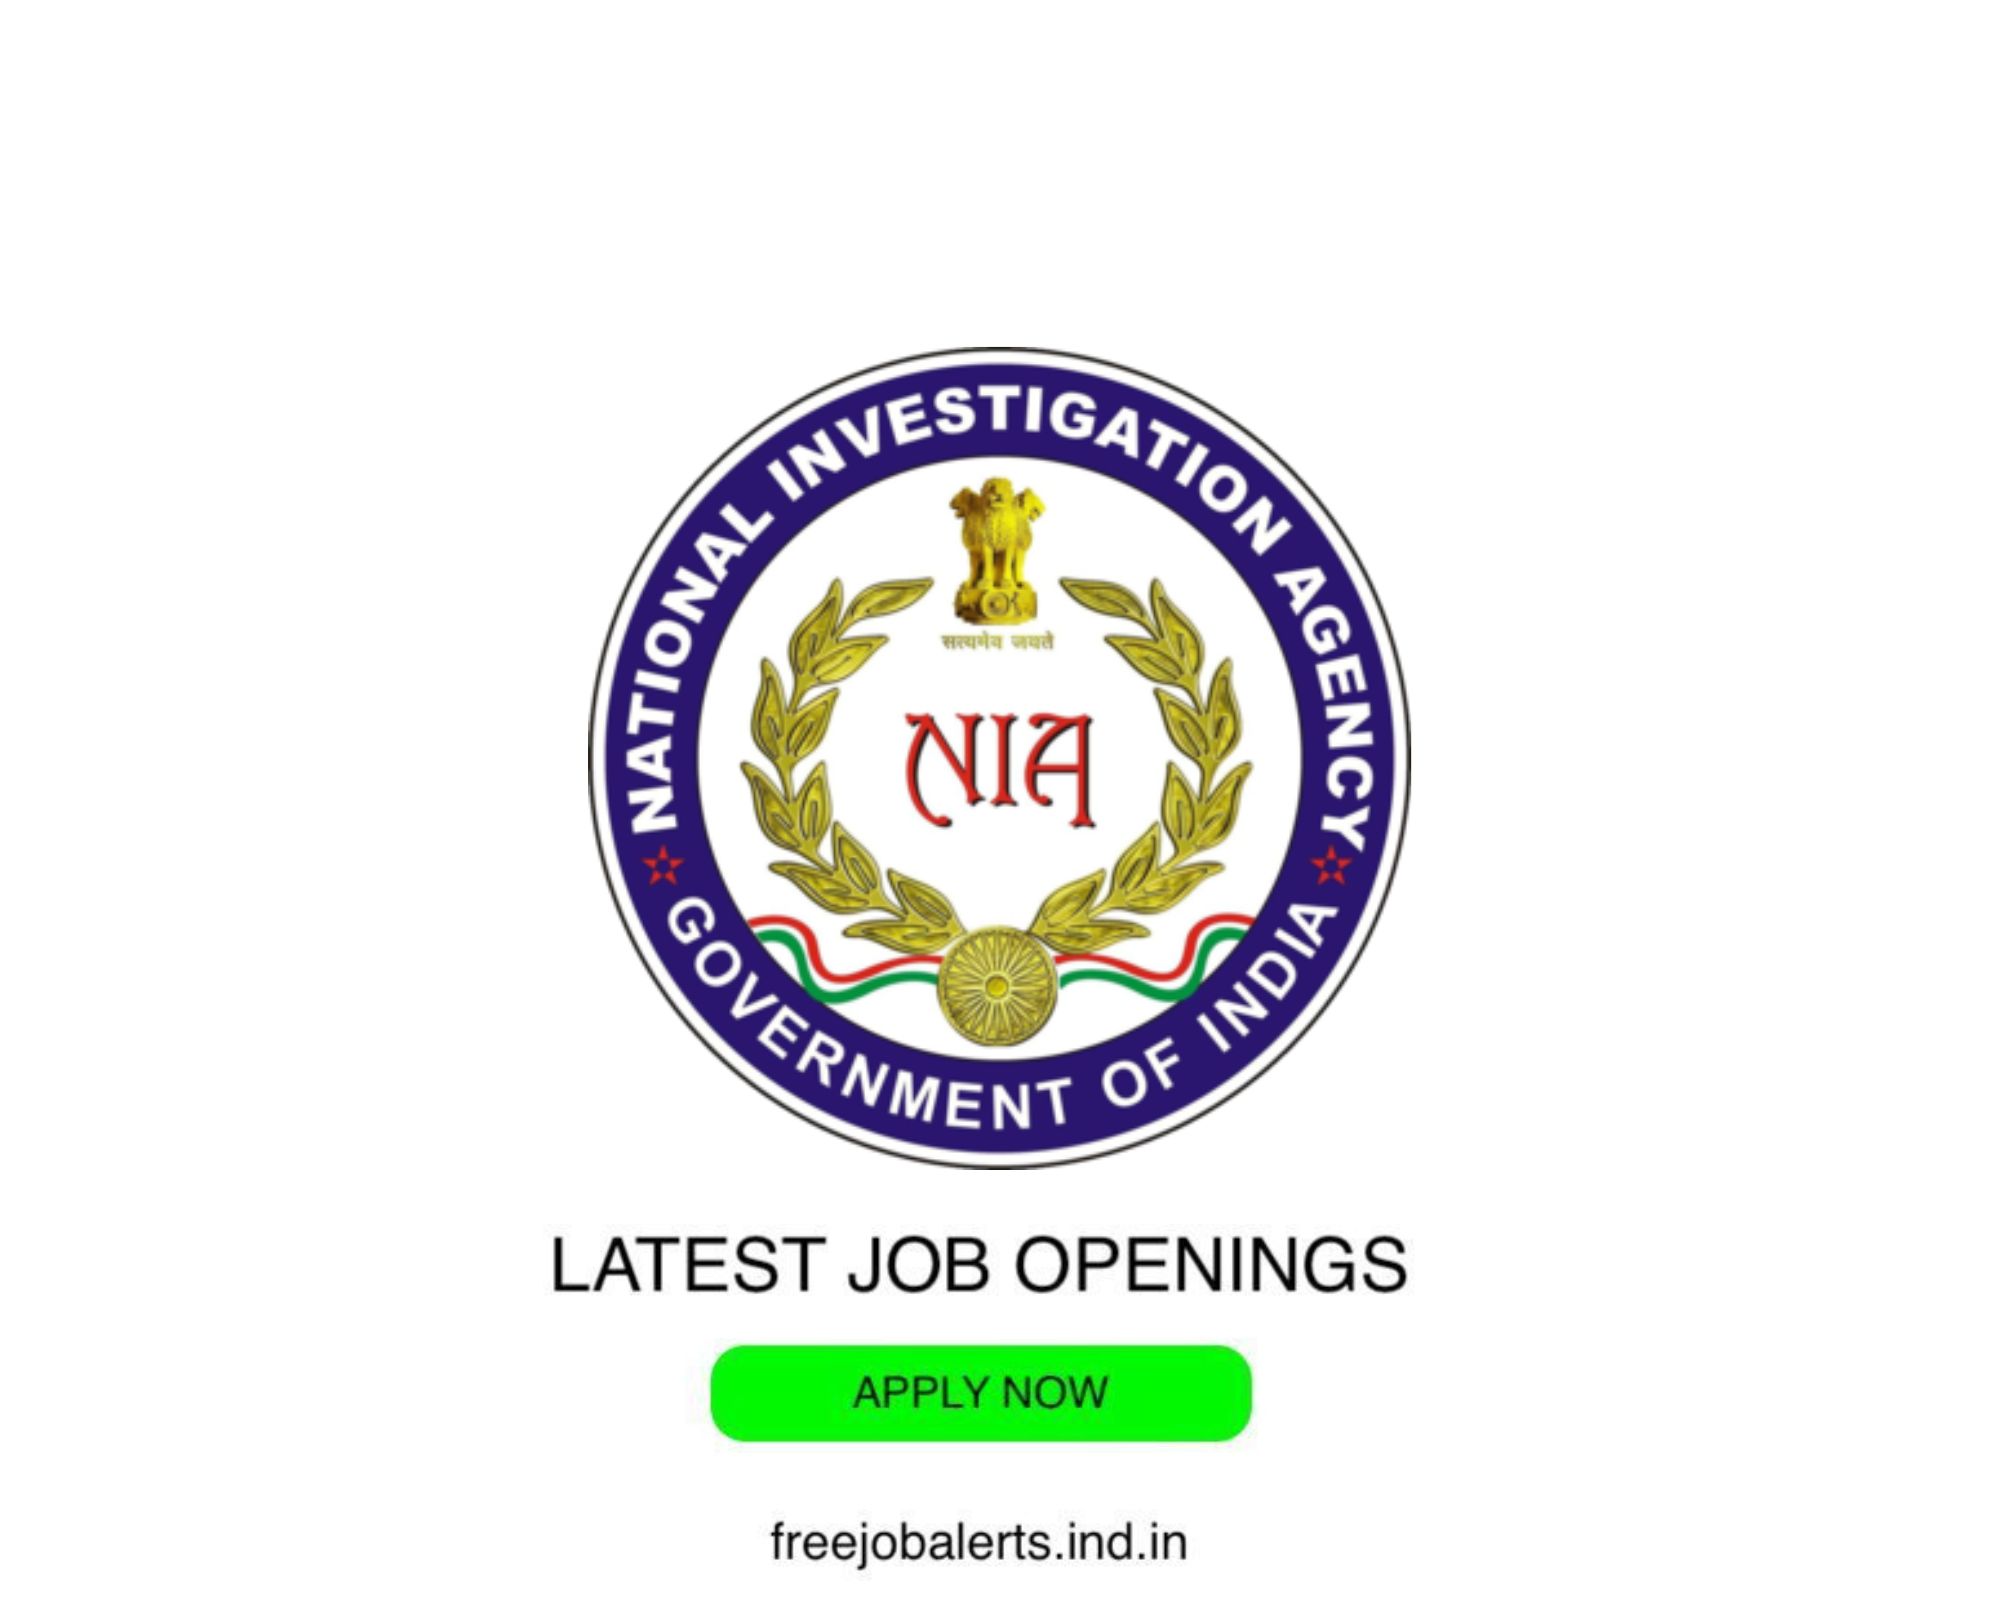 NIA - National Investigation Agency - Latest Govt job openings - Free job alerts, Indian Govt Jobs